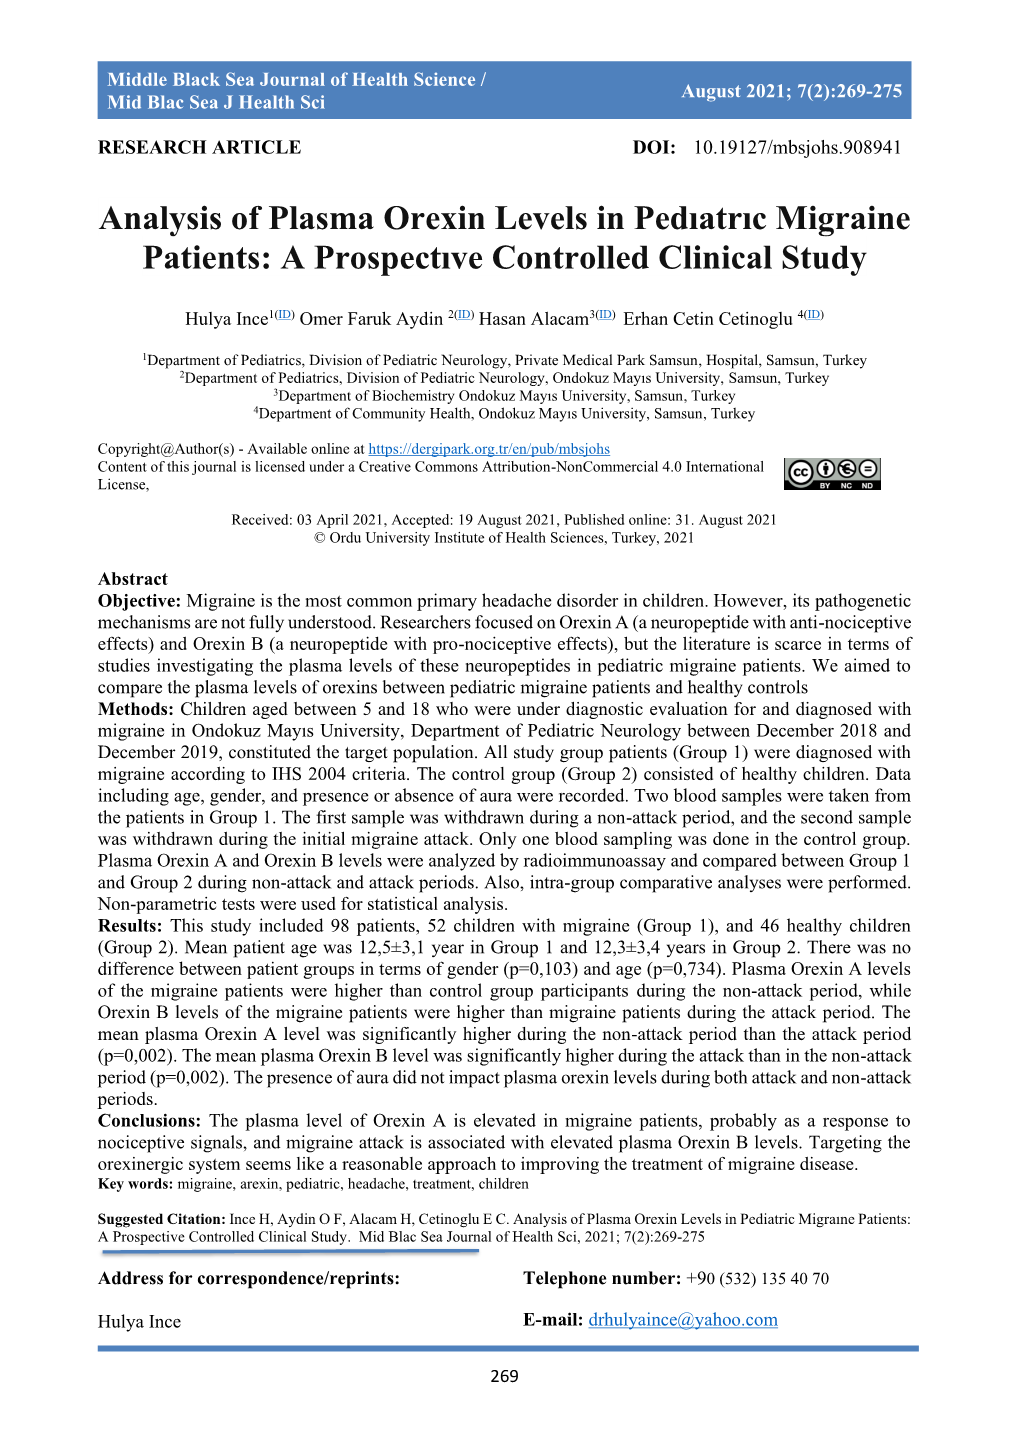 Analysis of Plasma Orexin Levels in Pedıatrıc Migraine Patients: a Prospectıve Controlled Clinical Study